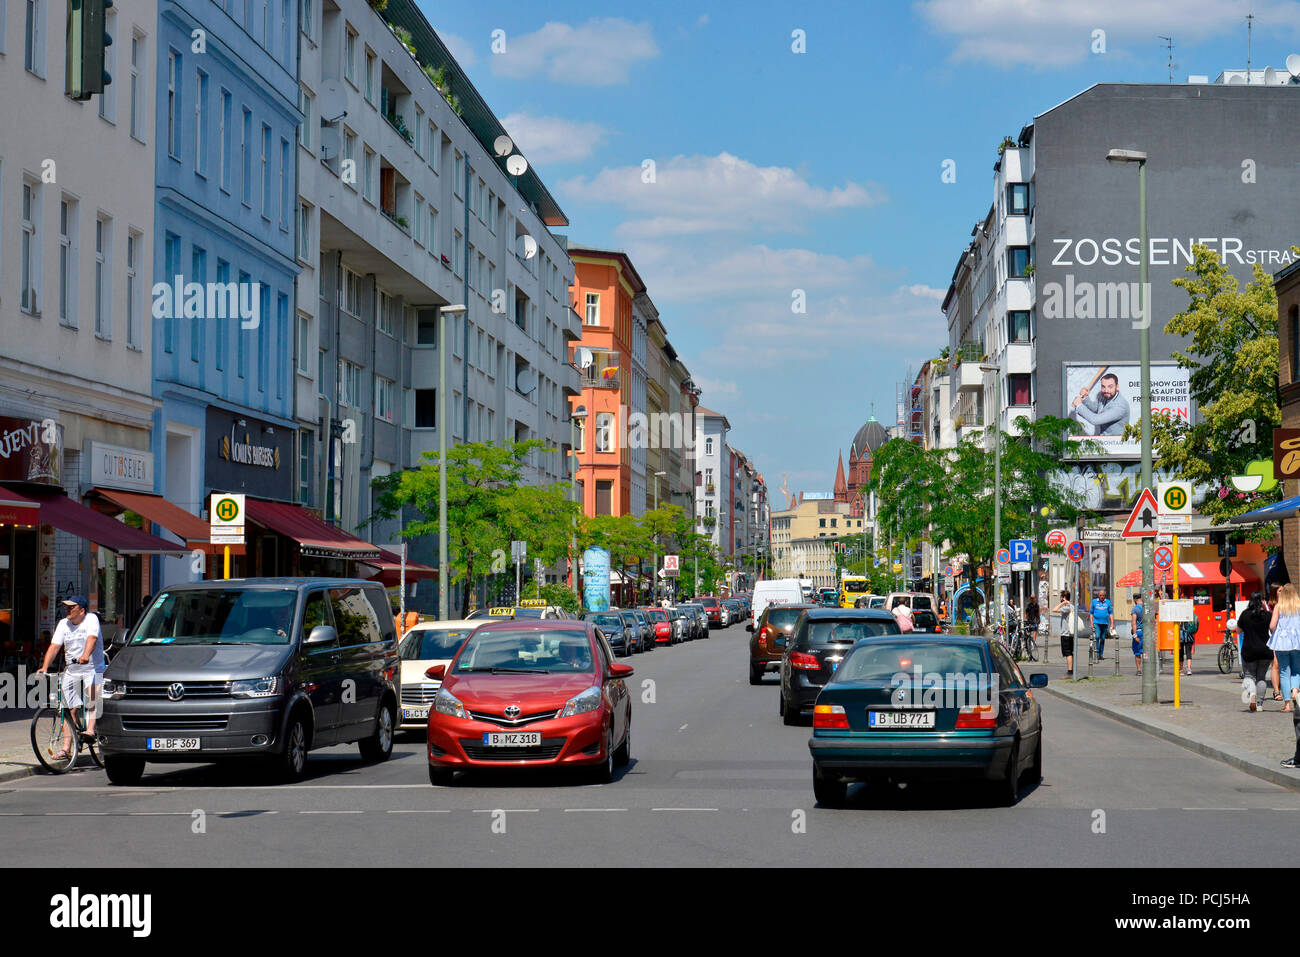 Verkehr, Zossener Straße, Kreuzberg, Berlin, Deutschland Stockfoto